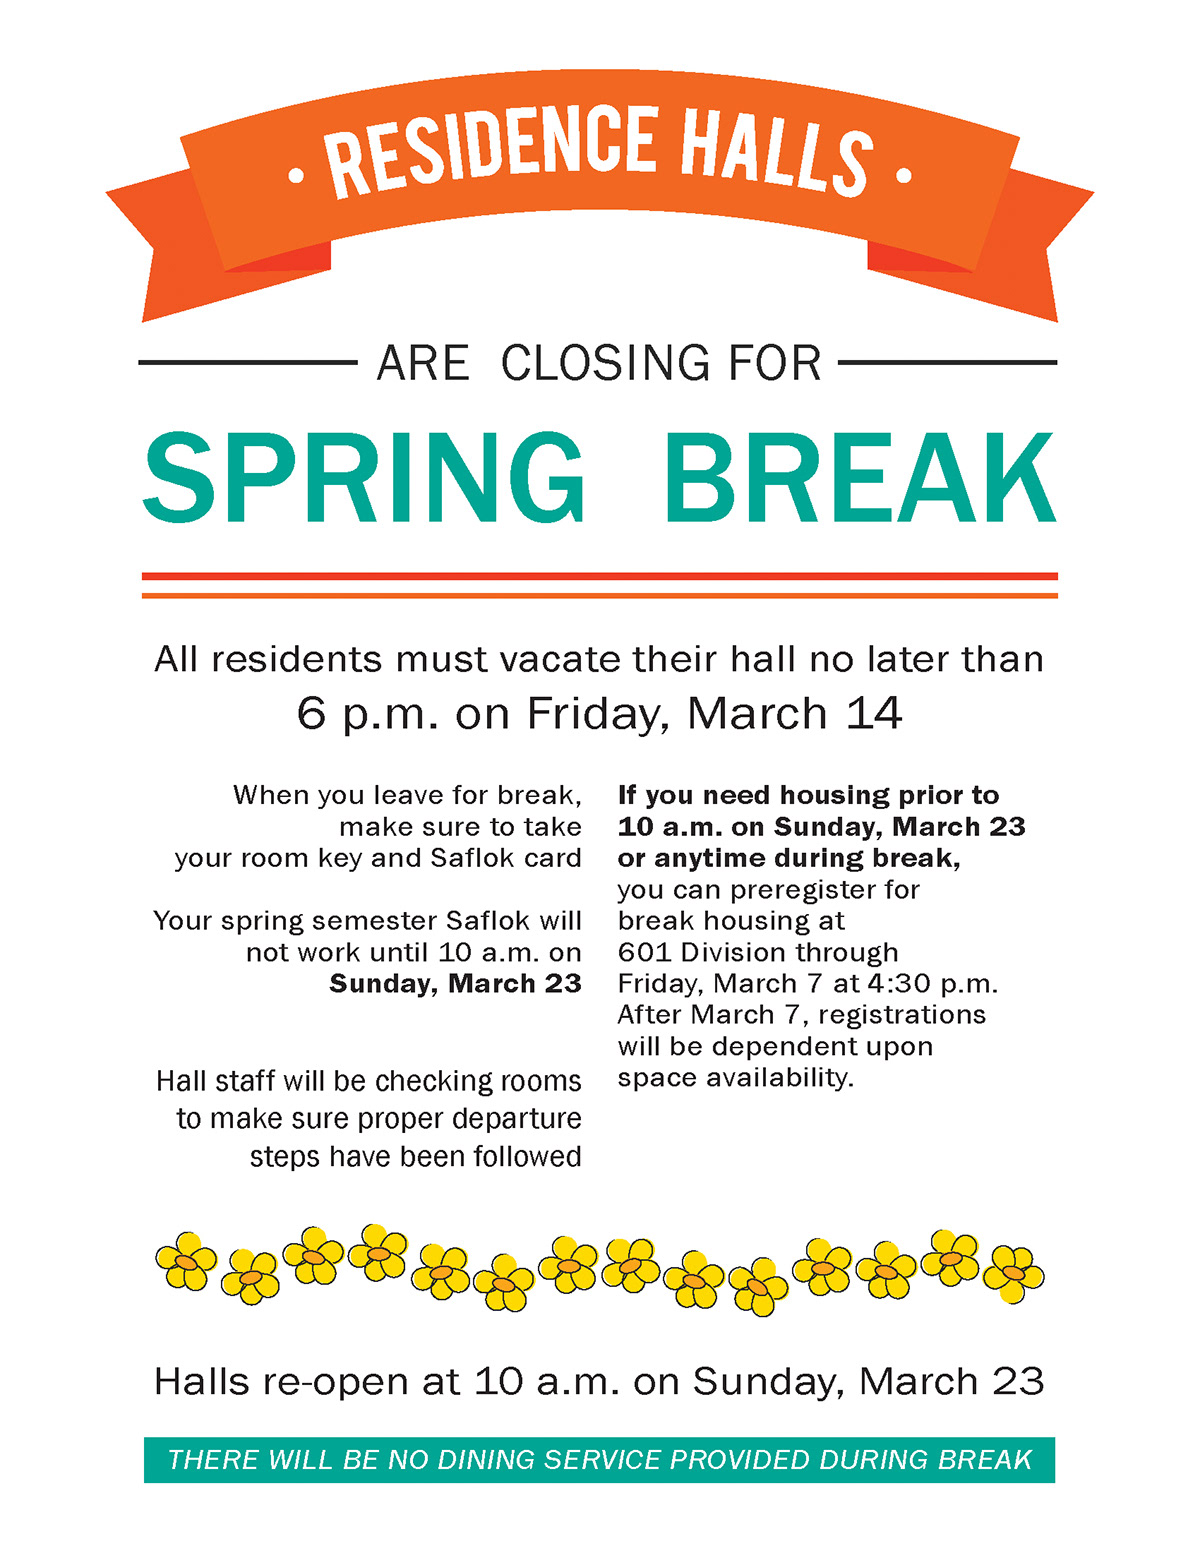 school spring spring break dorms hallway University campus